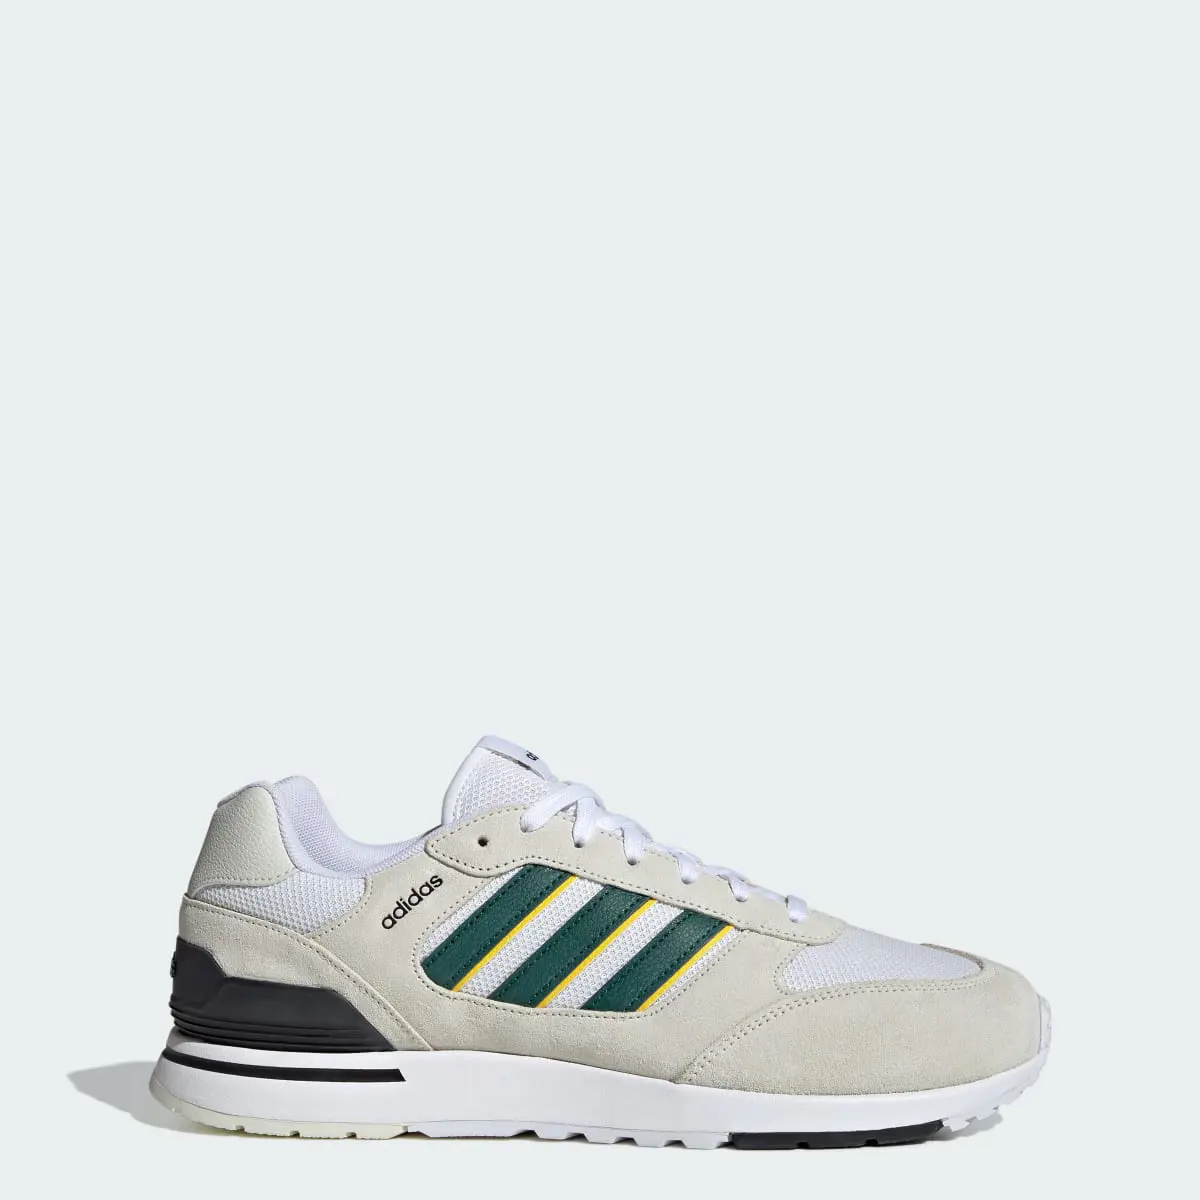 Adidas Run 80s Shoes. 1